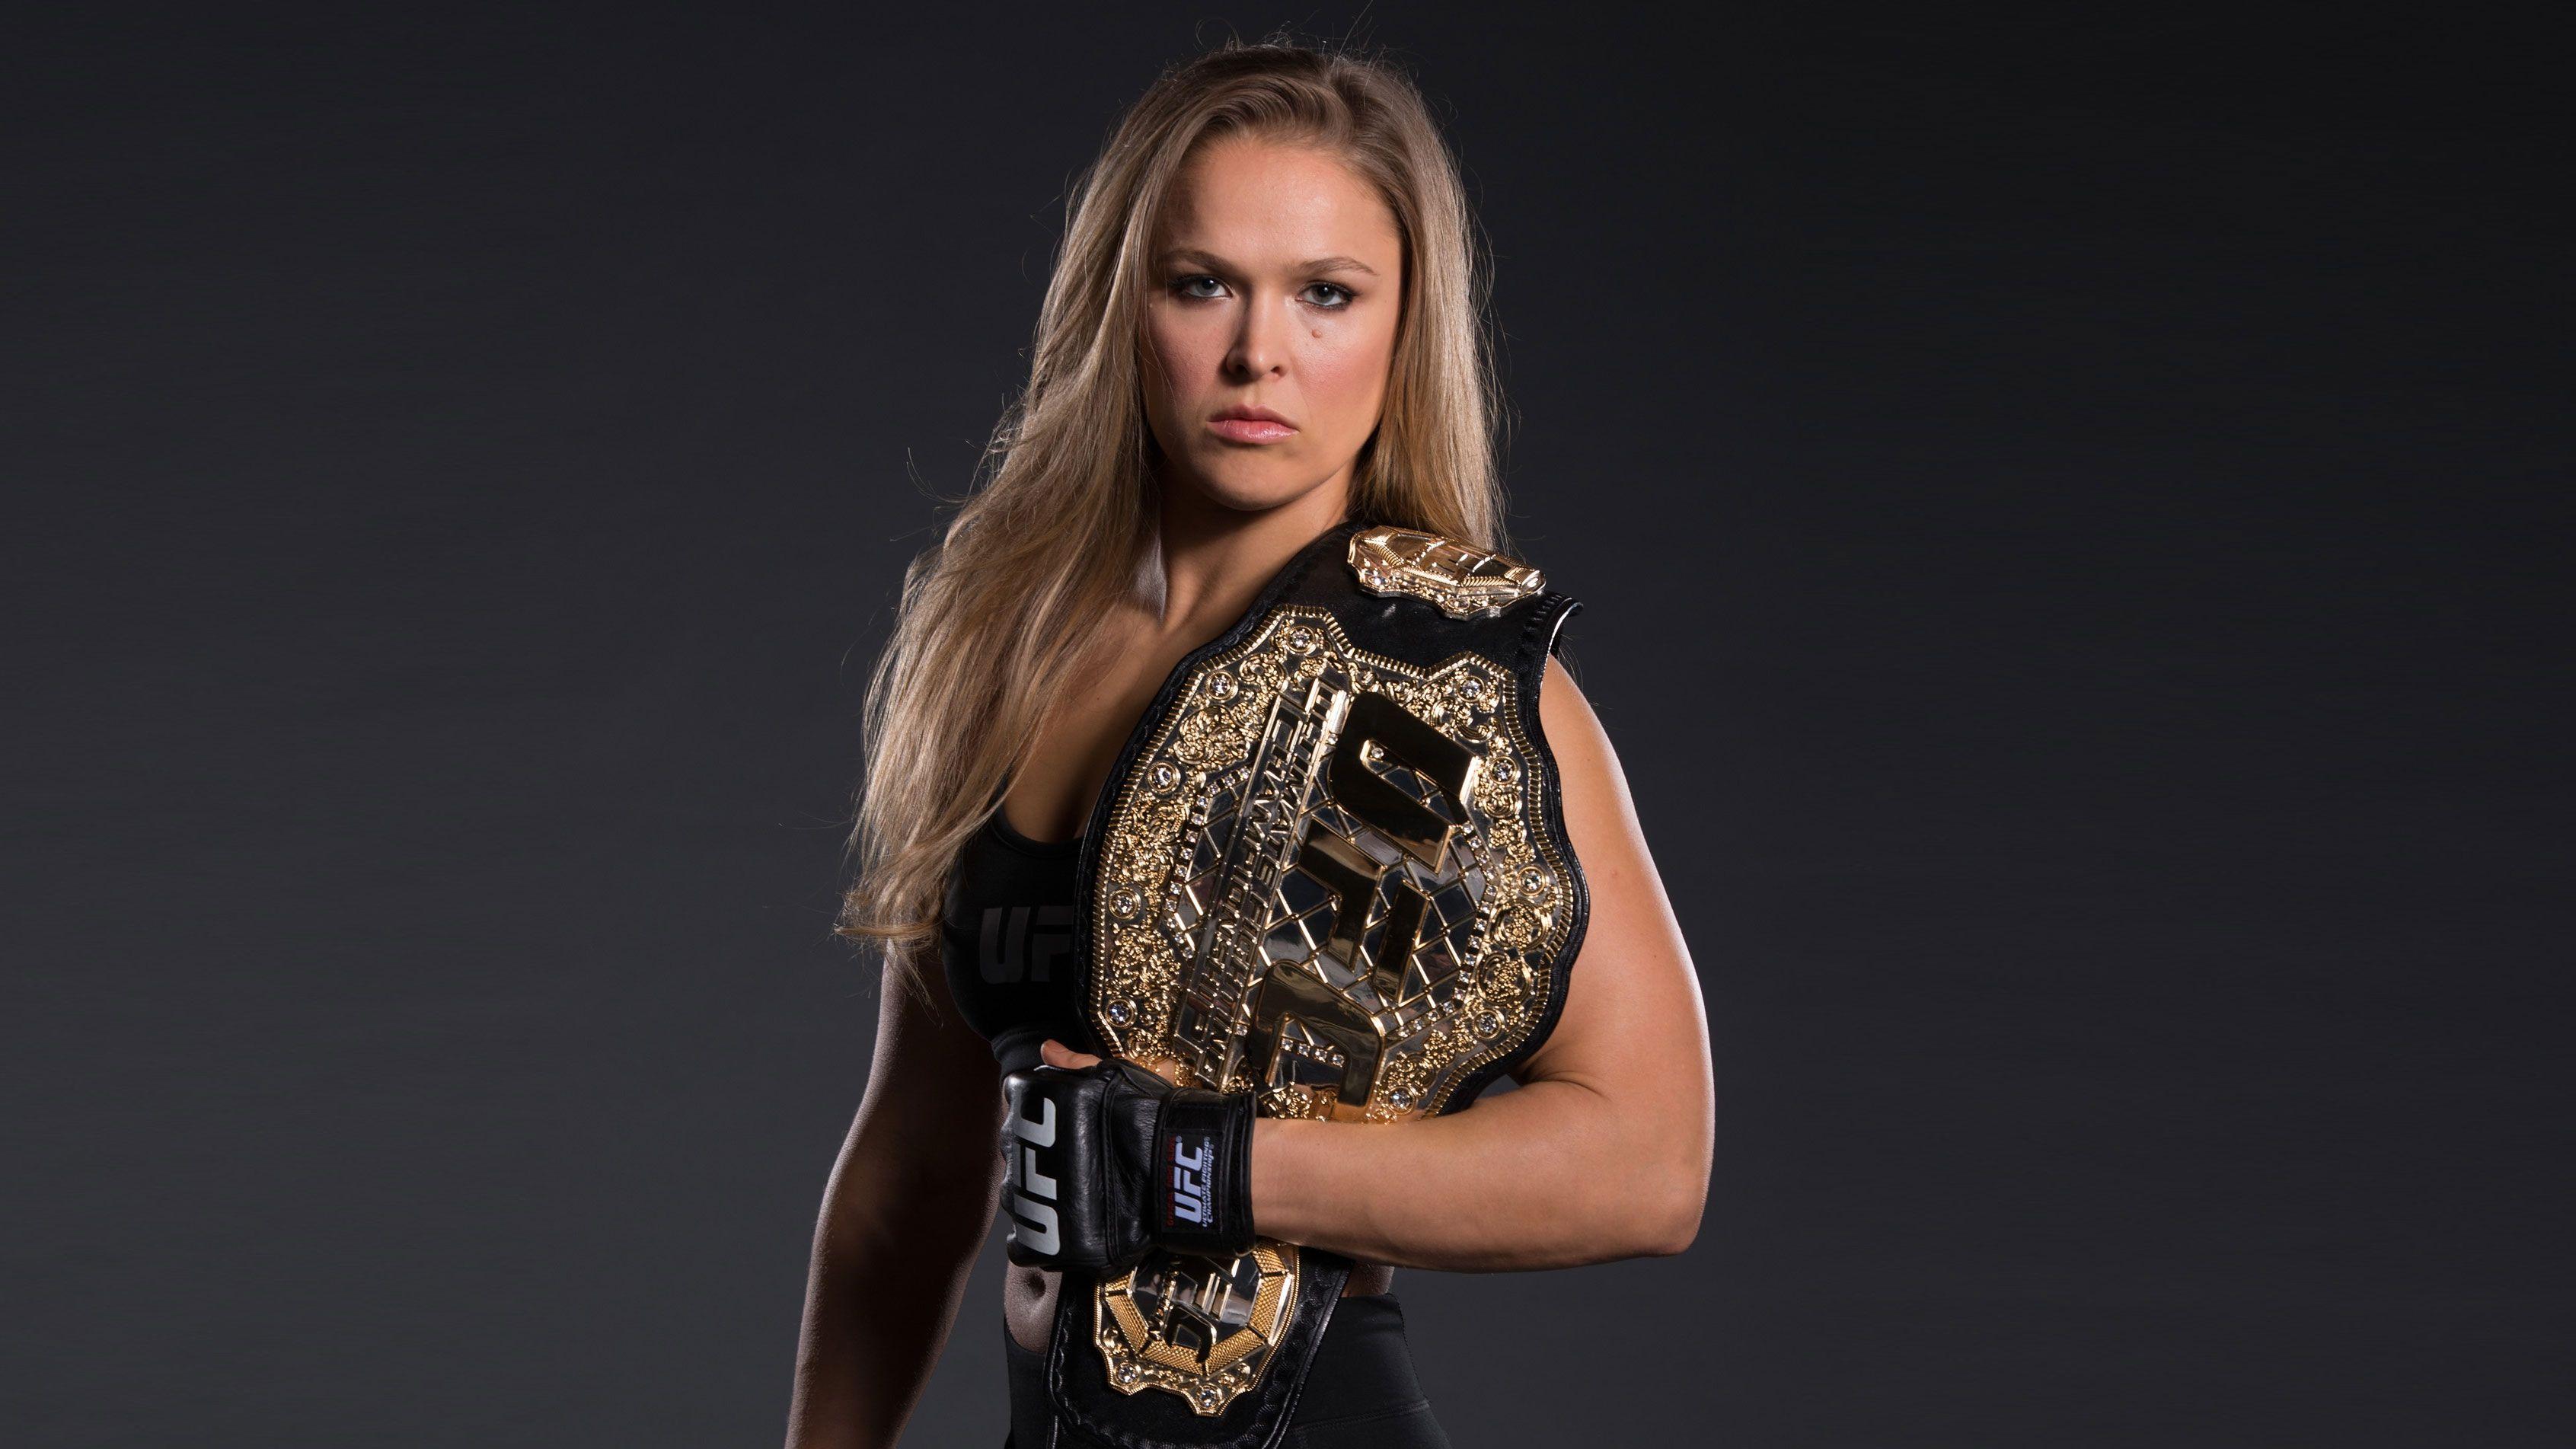 UFC women's bantamweight champion Ronda Rousey Talks Training